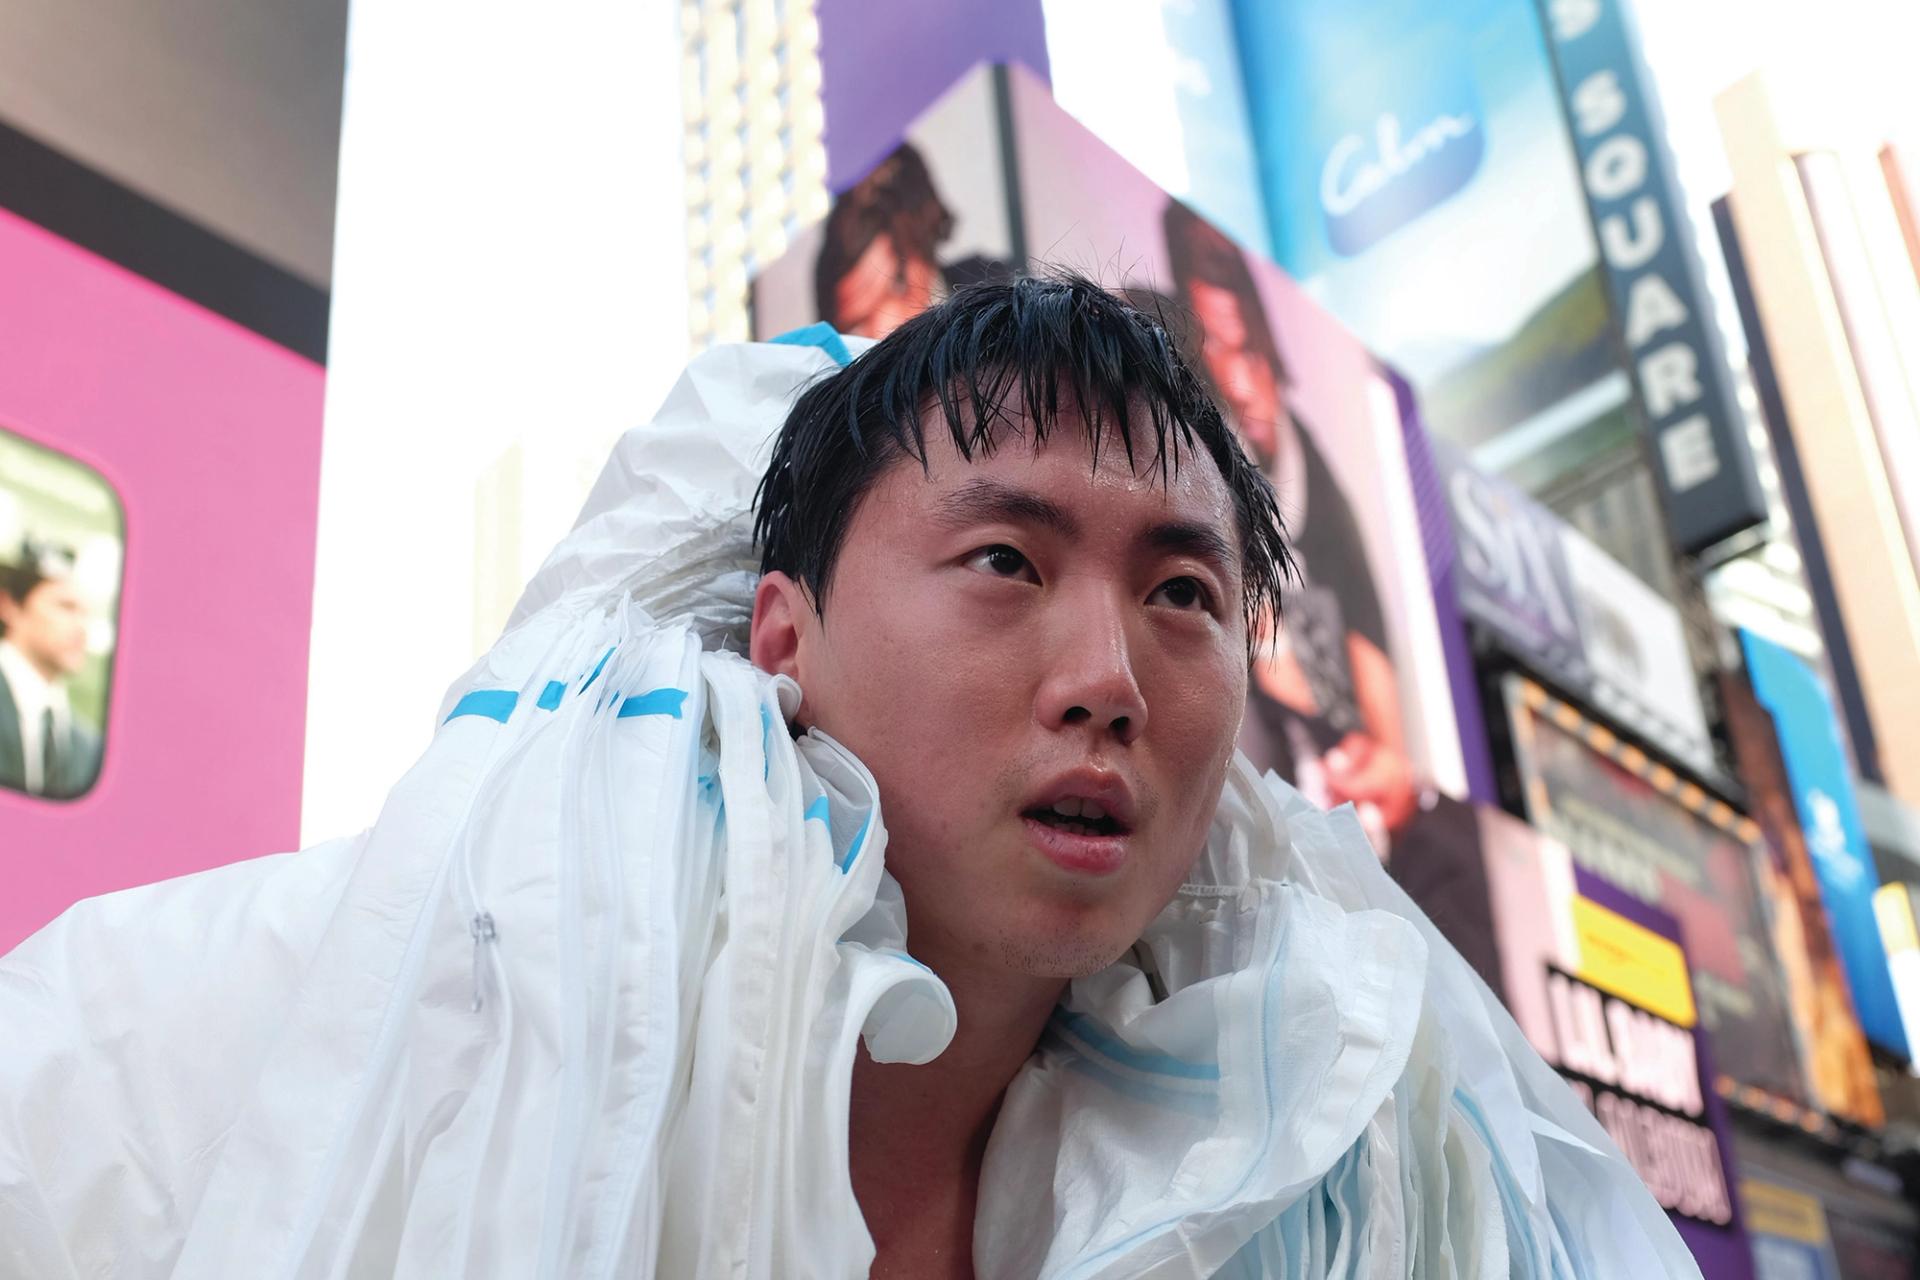 Zhisheng Wu wrapped himself in 27 hazmat suits to highlight China’s pandemic restrictions Courtesy of Zhisheng Wu